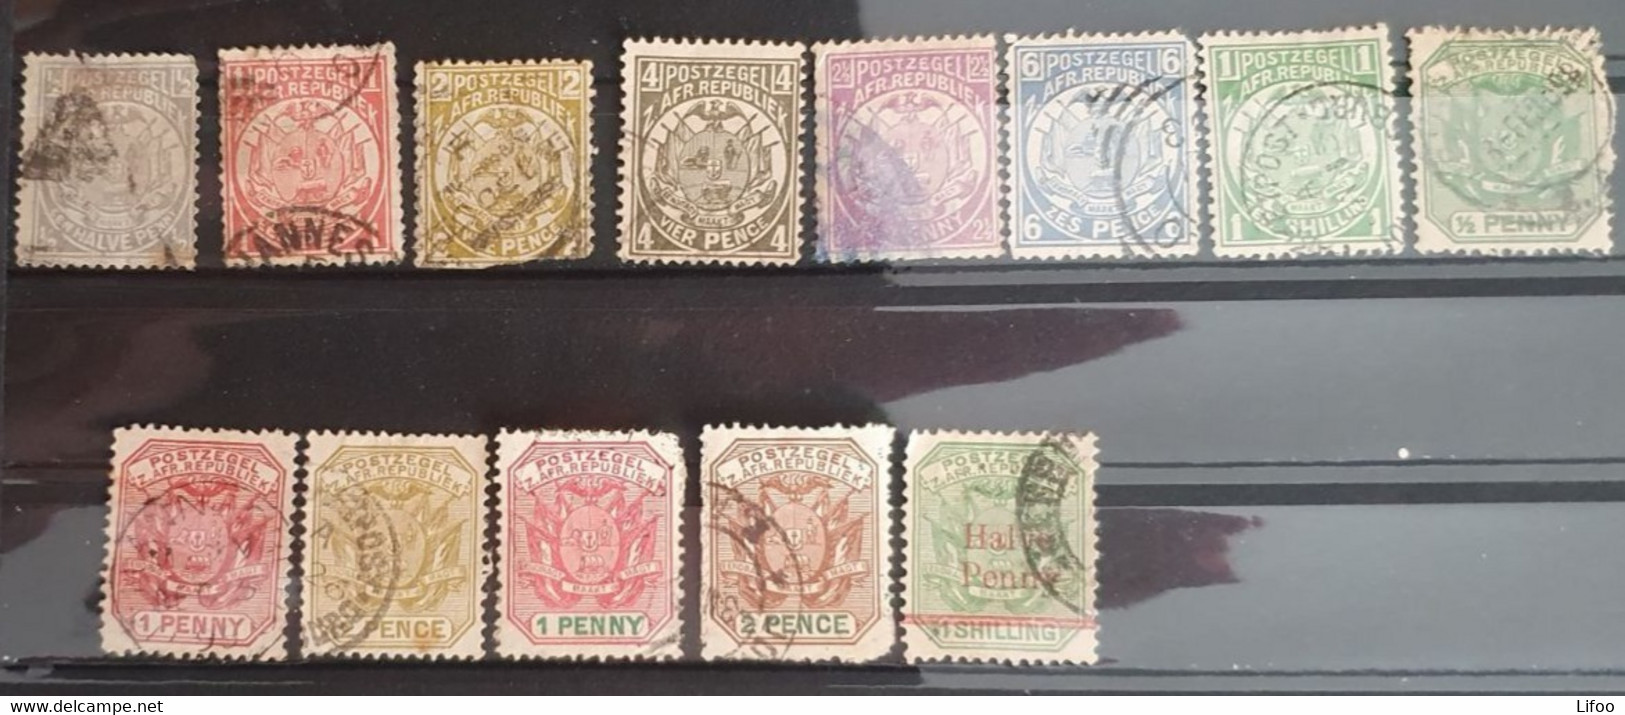 POSTZEGEL Z. AFR. REPUBLIEK : 13 Canceled Stamps - New Republic (1886-1887)